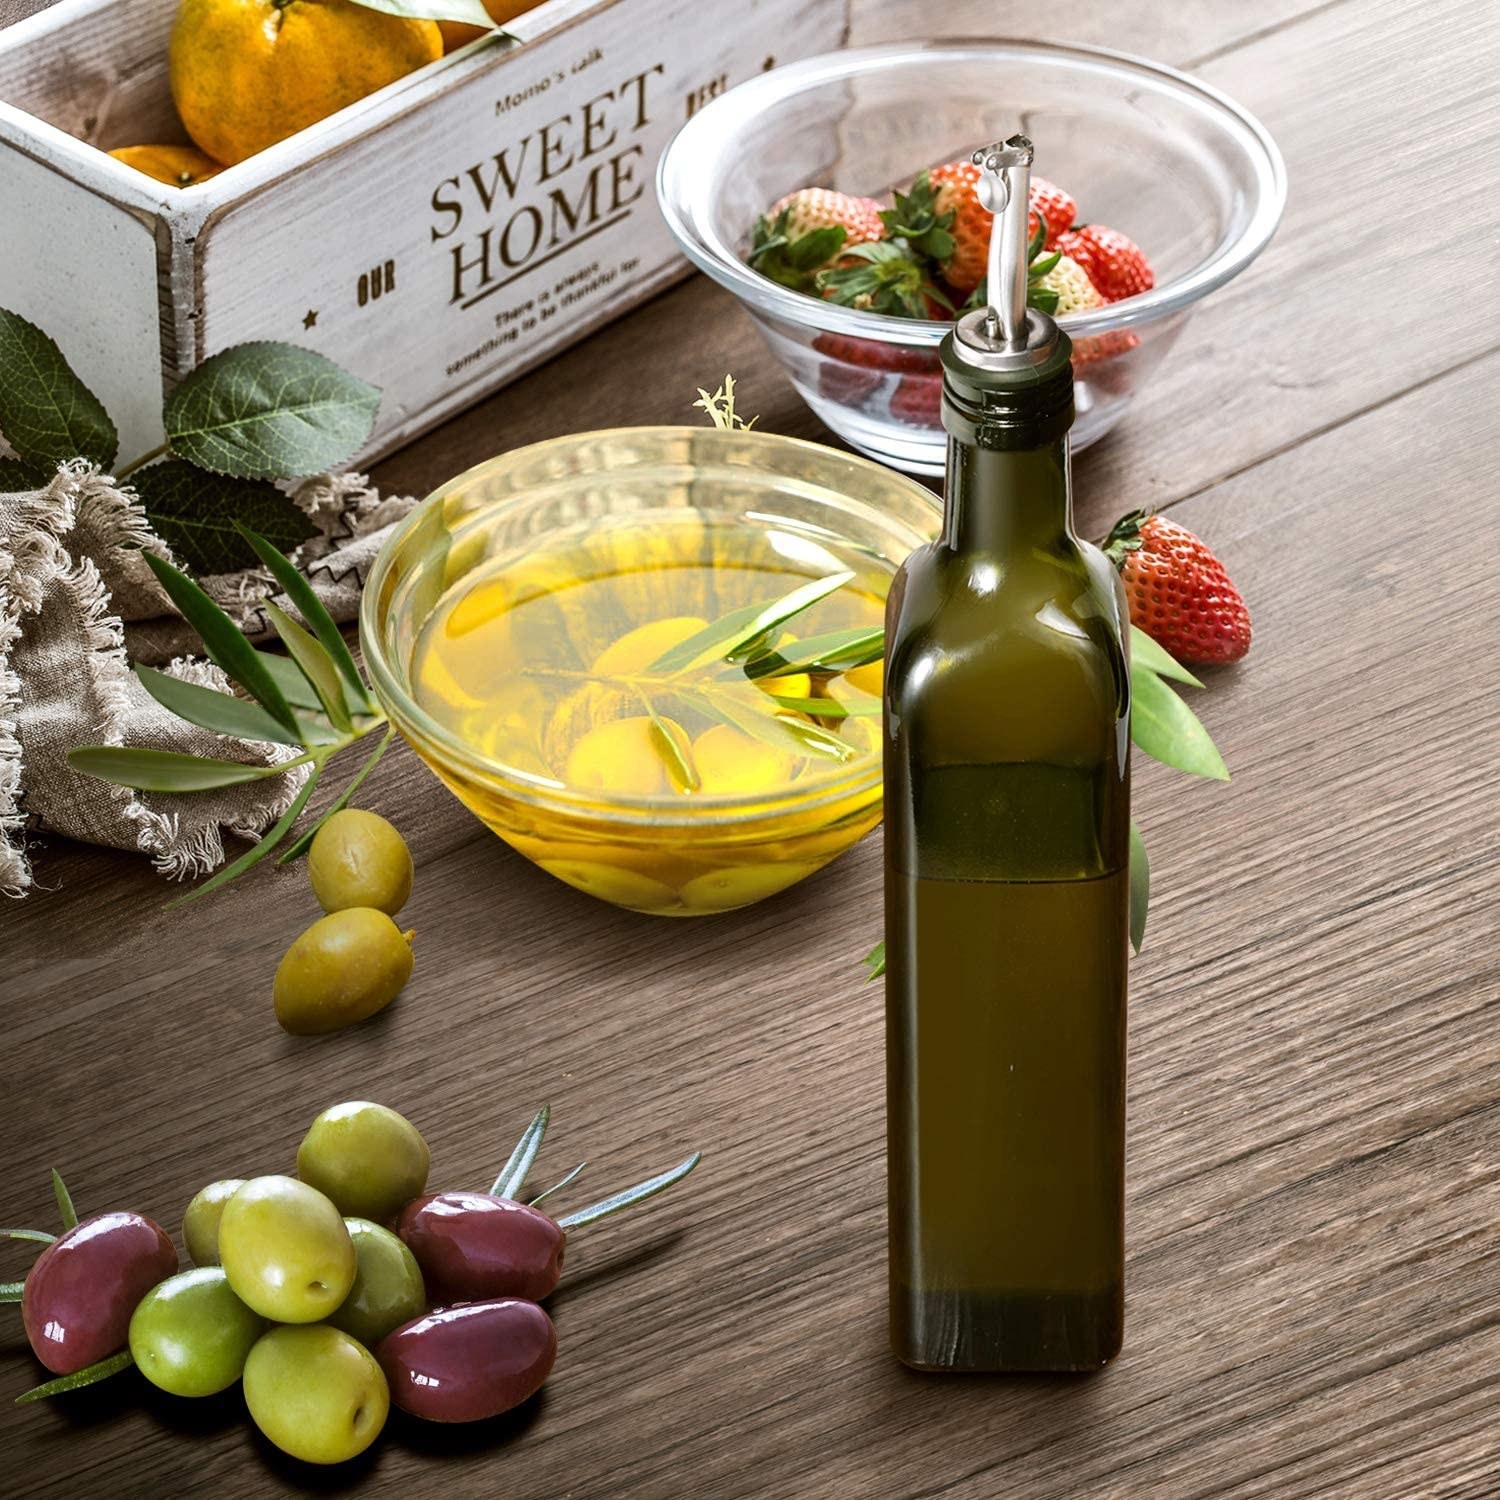 The olive oil bottle